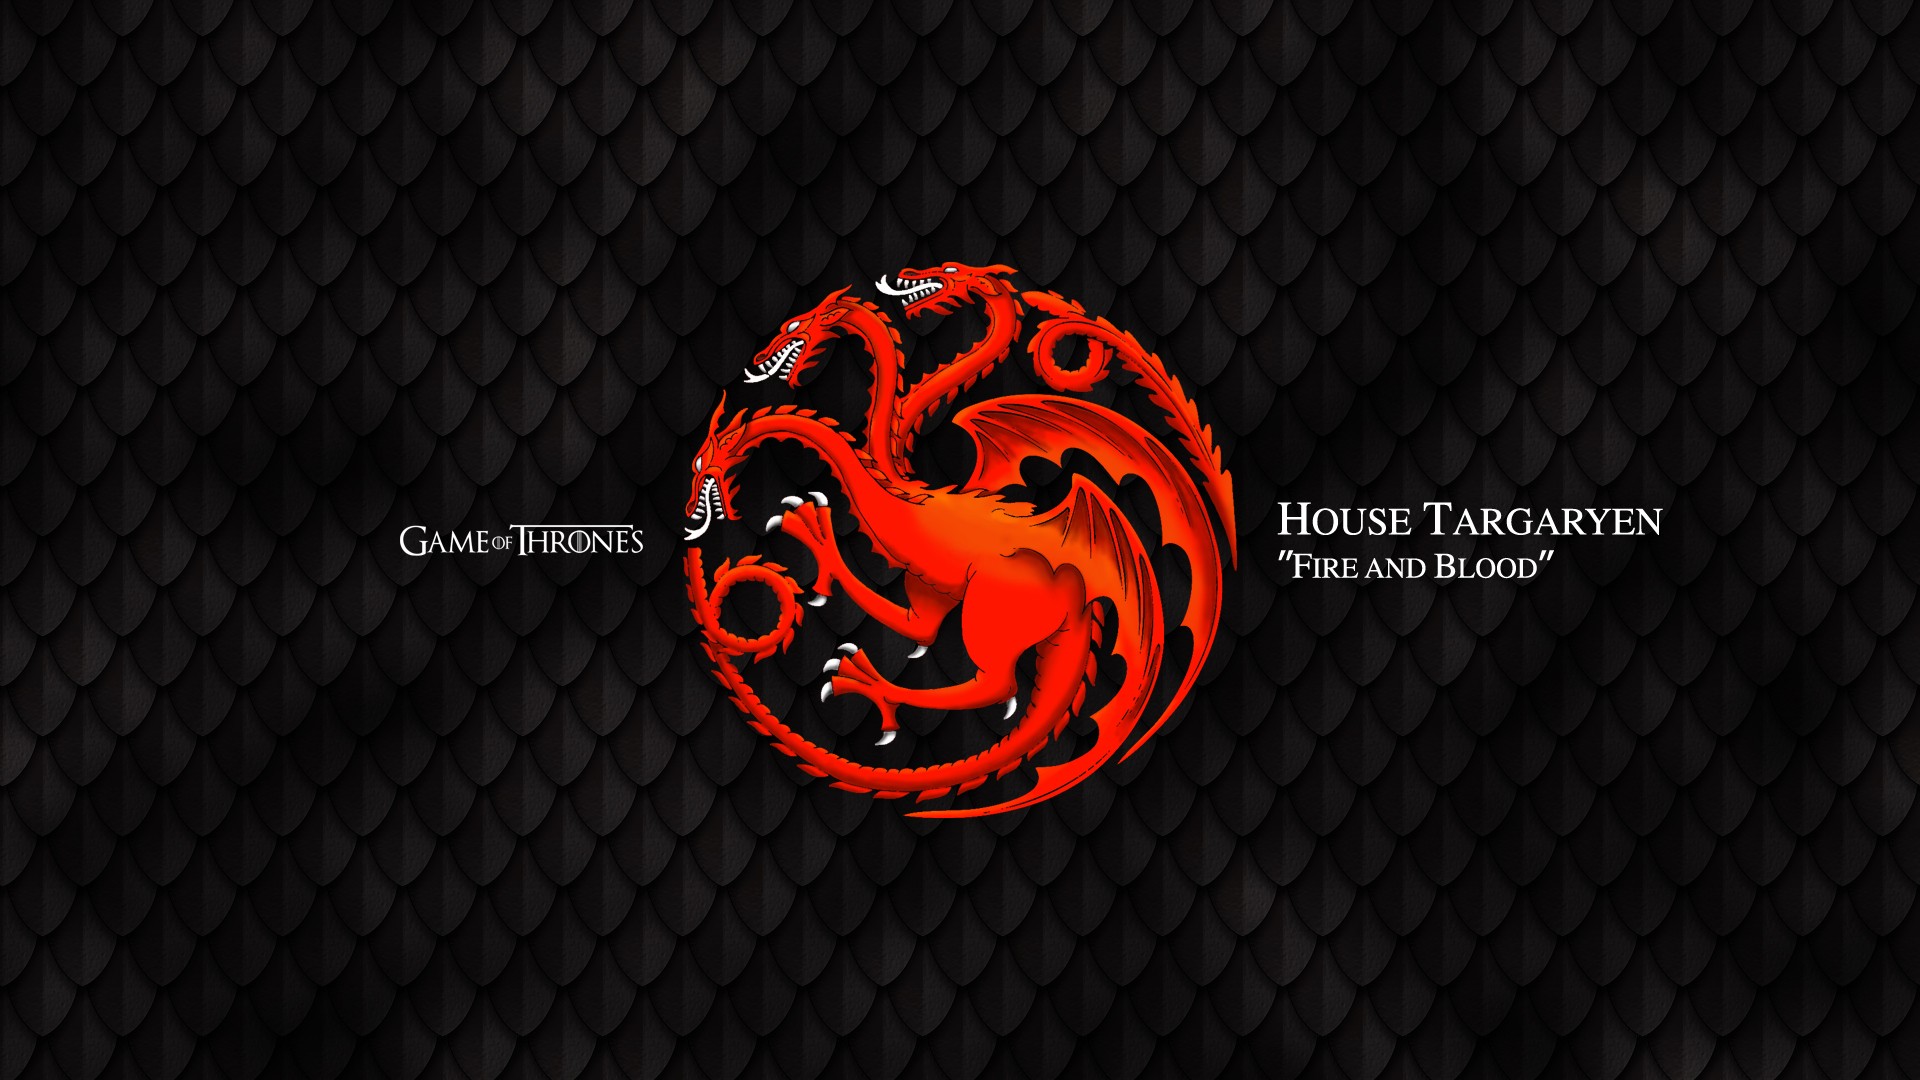 General 1920x1080 Game of Thrones House Targaryen sigils TV series simple background black background